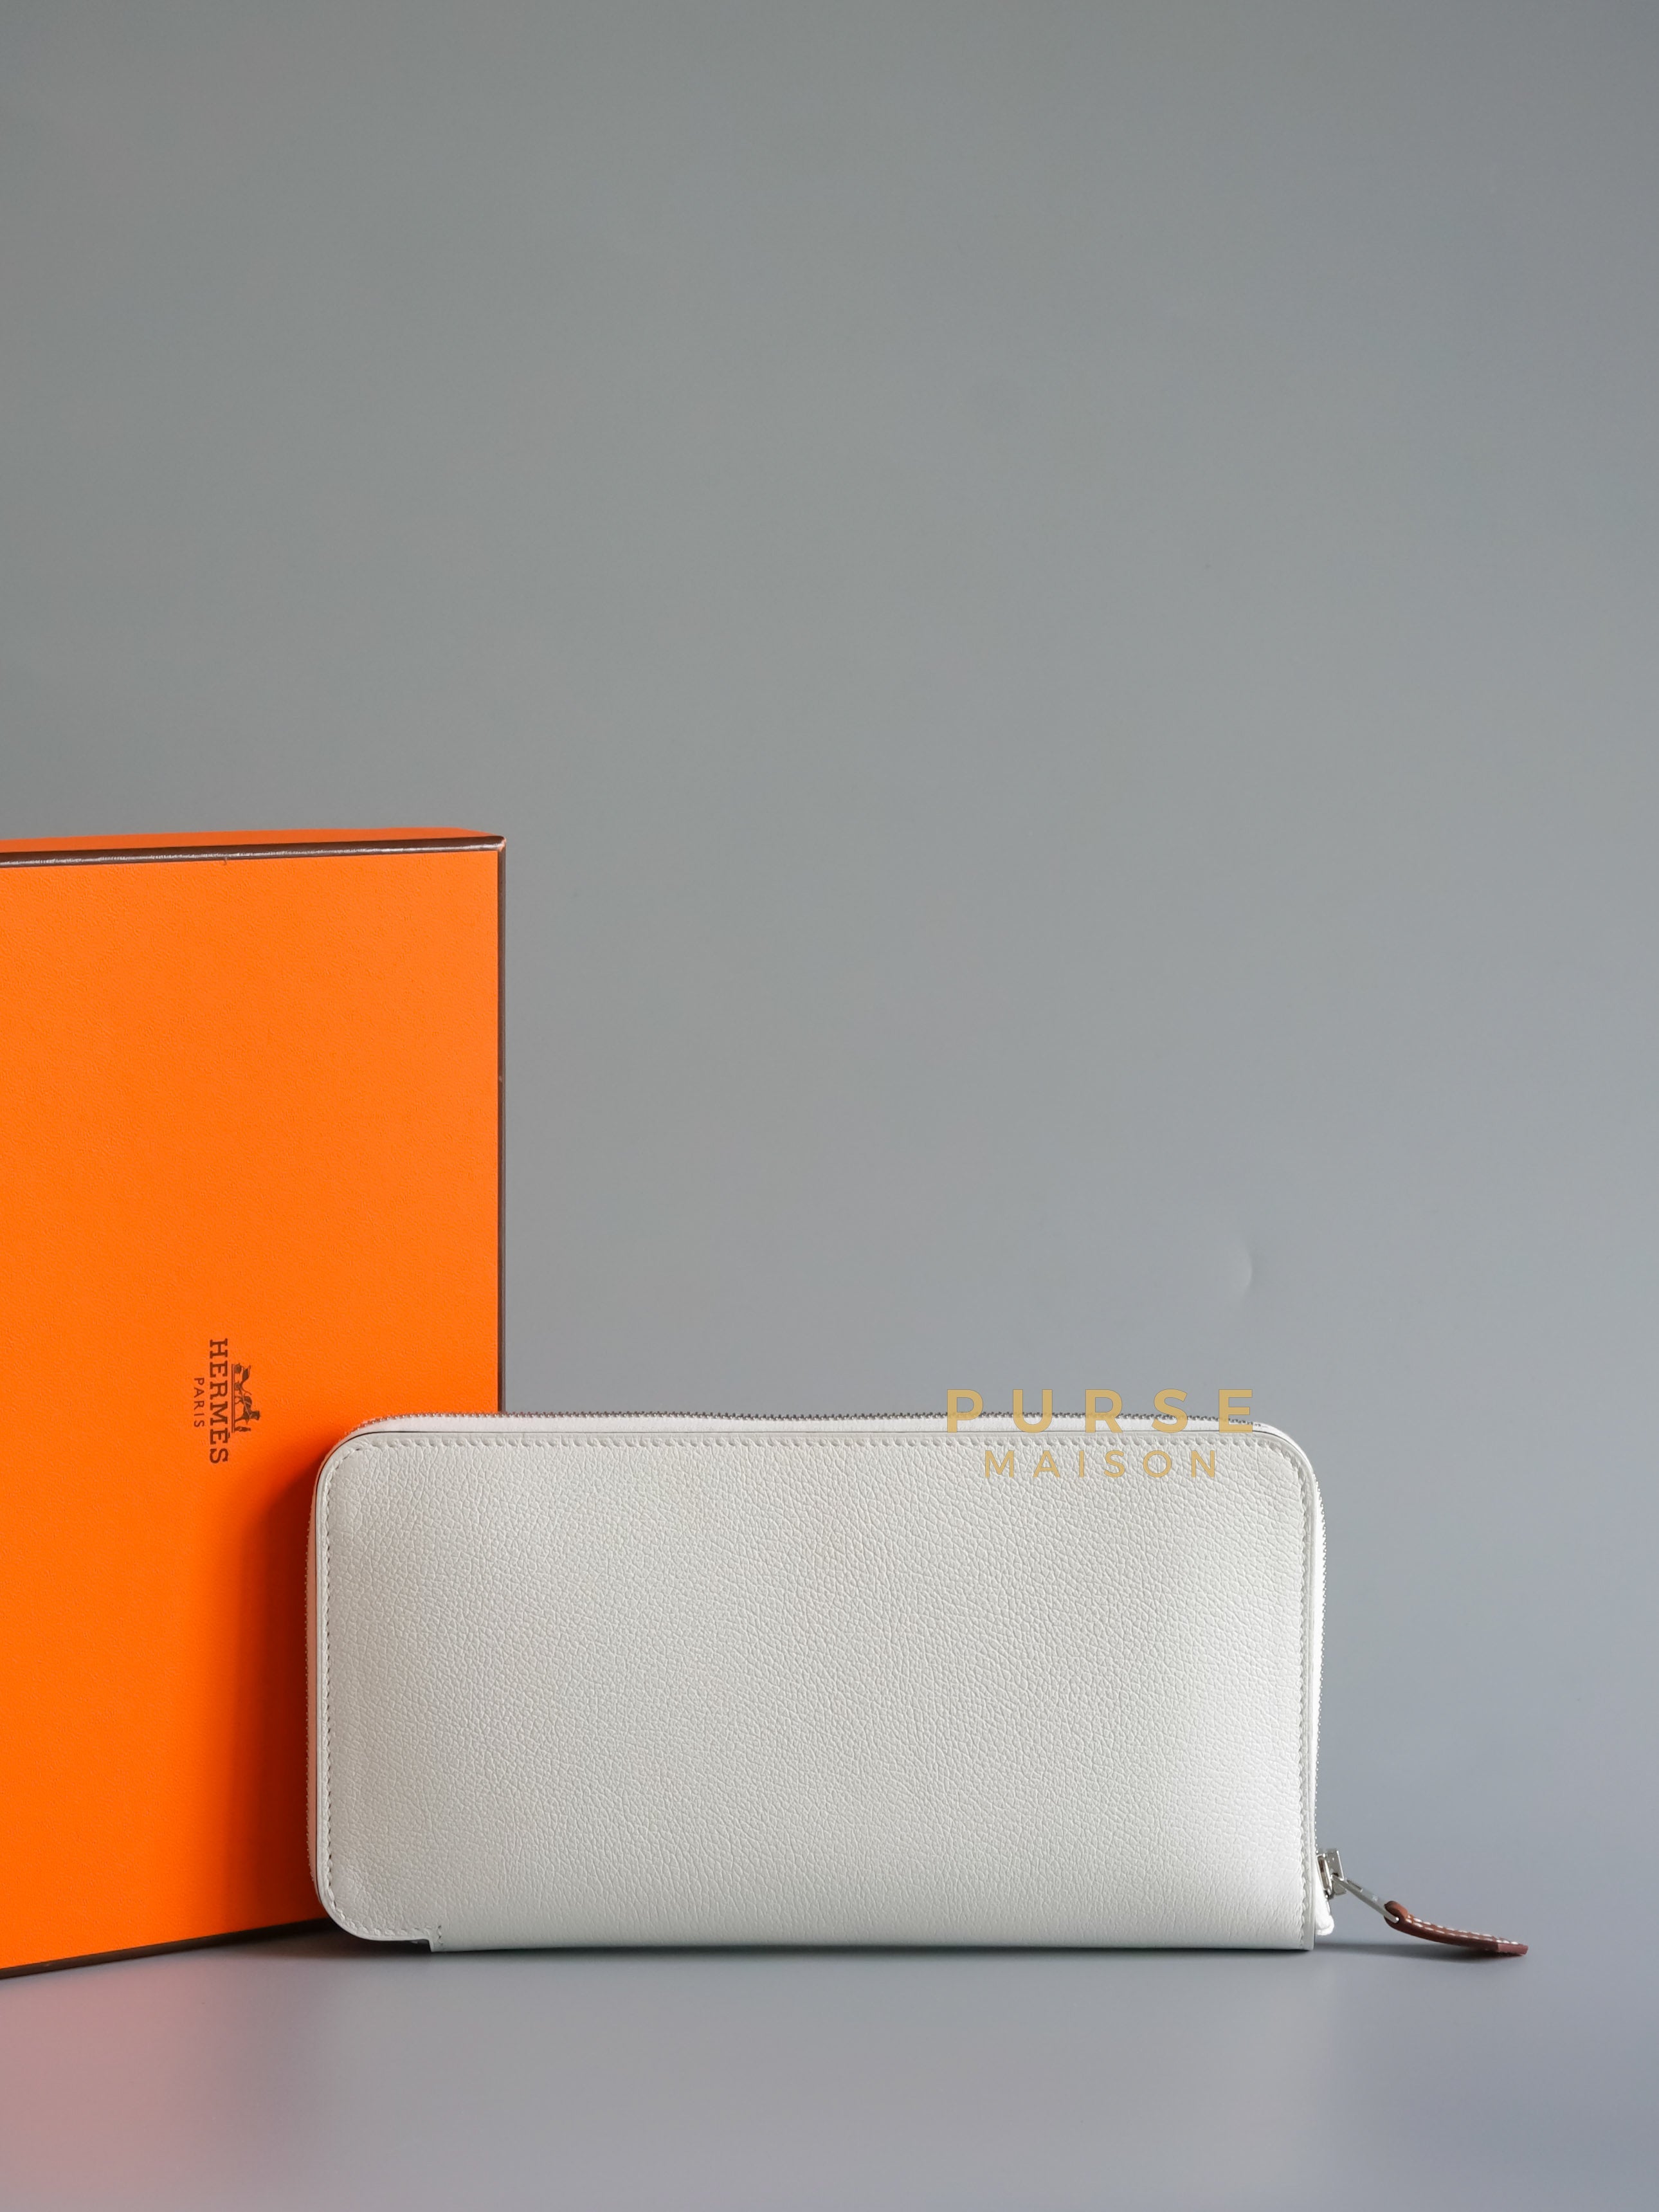 Azap Silk Inn Epsom Blanc Electric Long Wallet Stamp B | Purse Maison Luxury Bags Shop